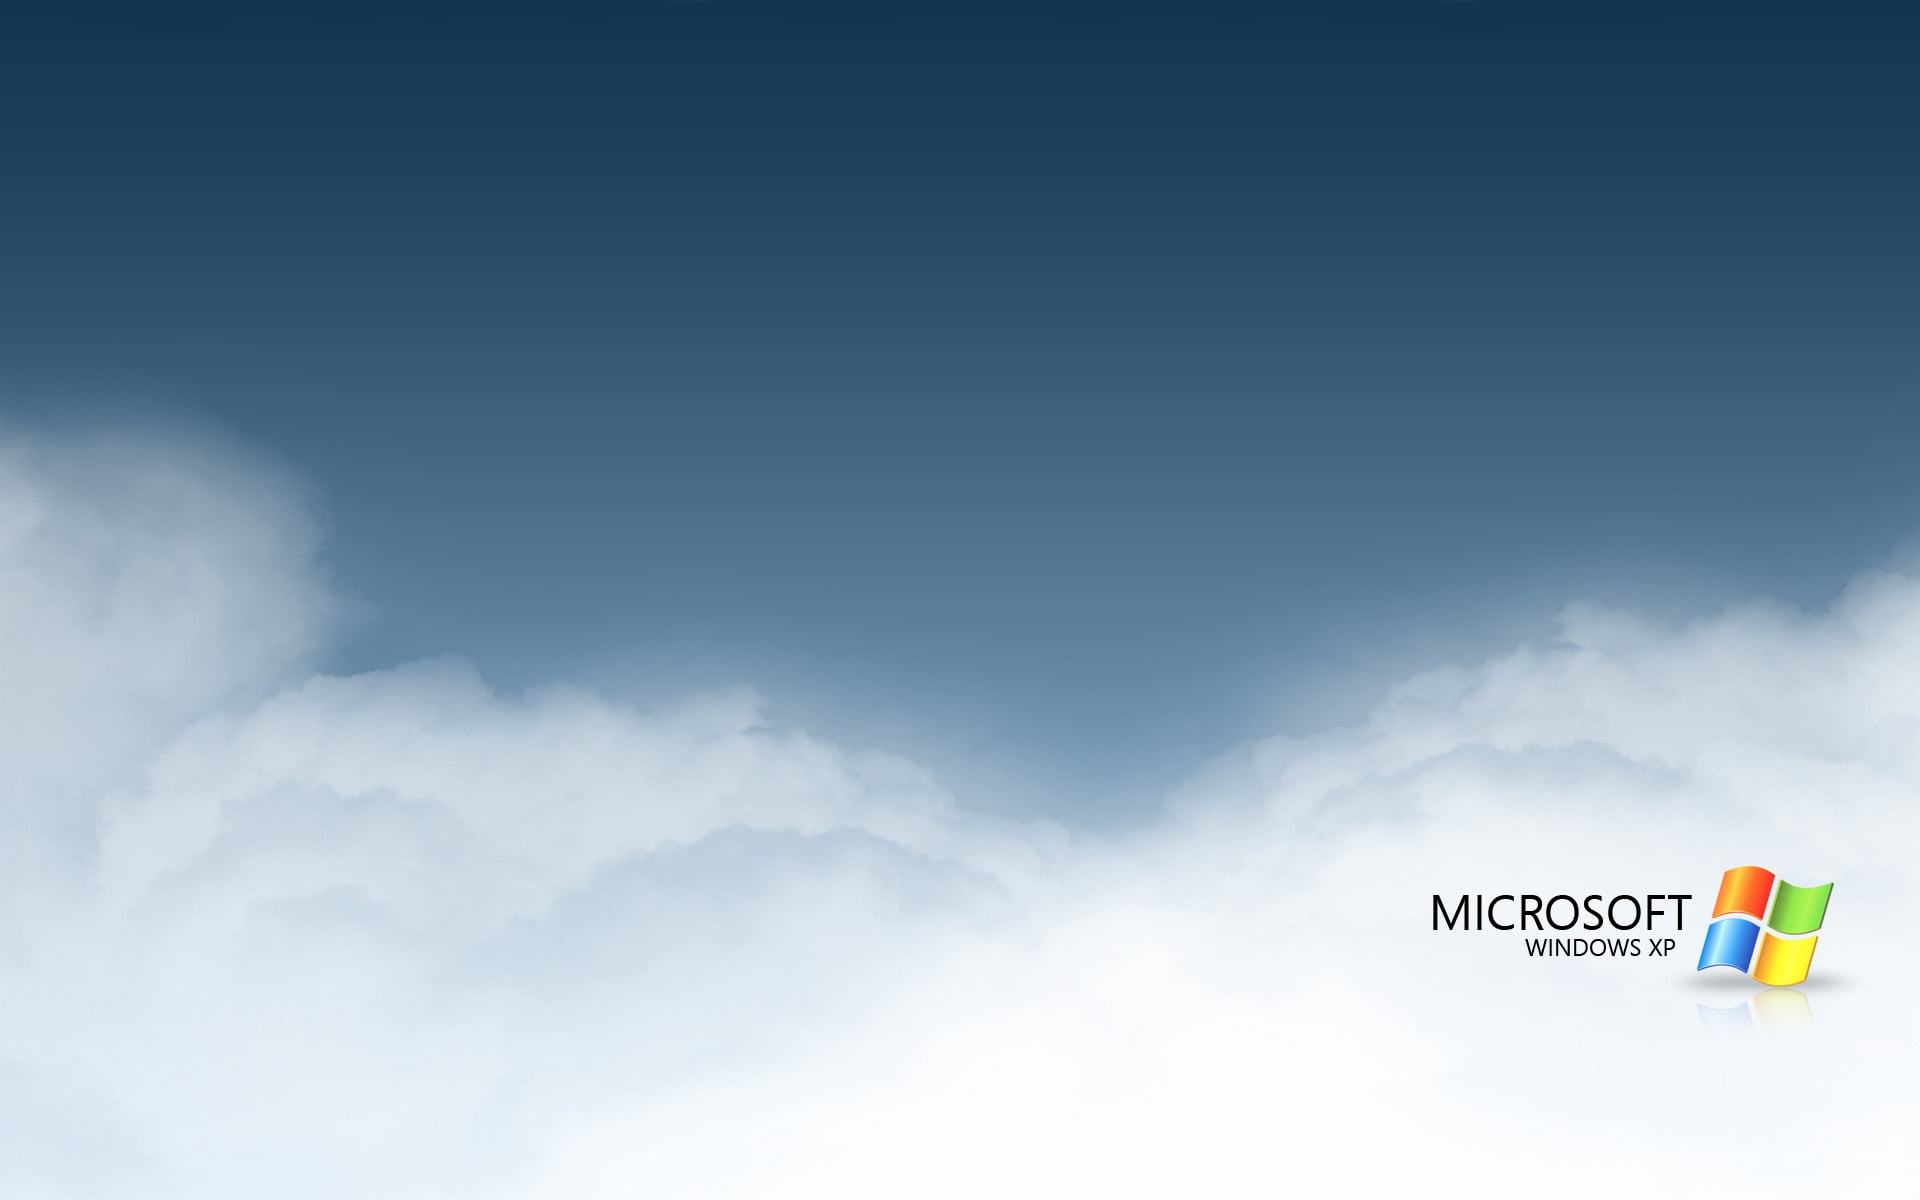 Microsoft Windows XP digital wallpaper, clouds, blue, white, logo